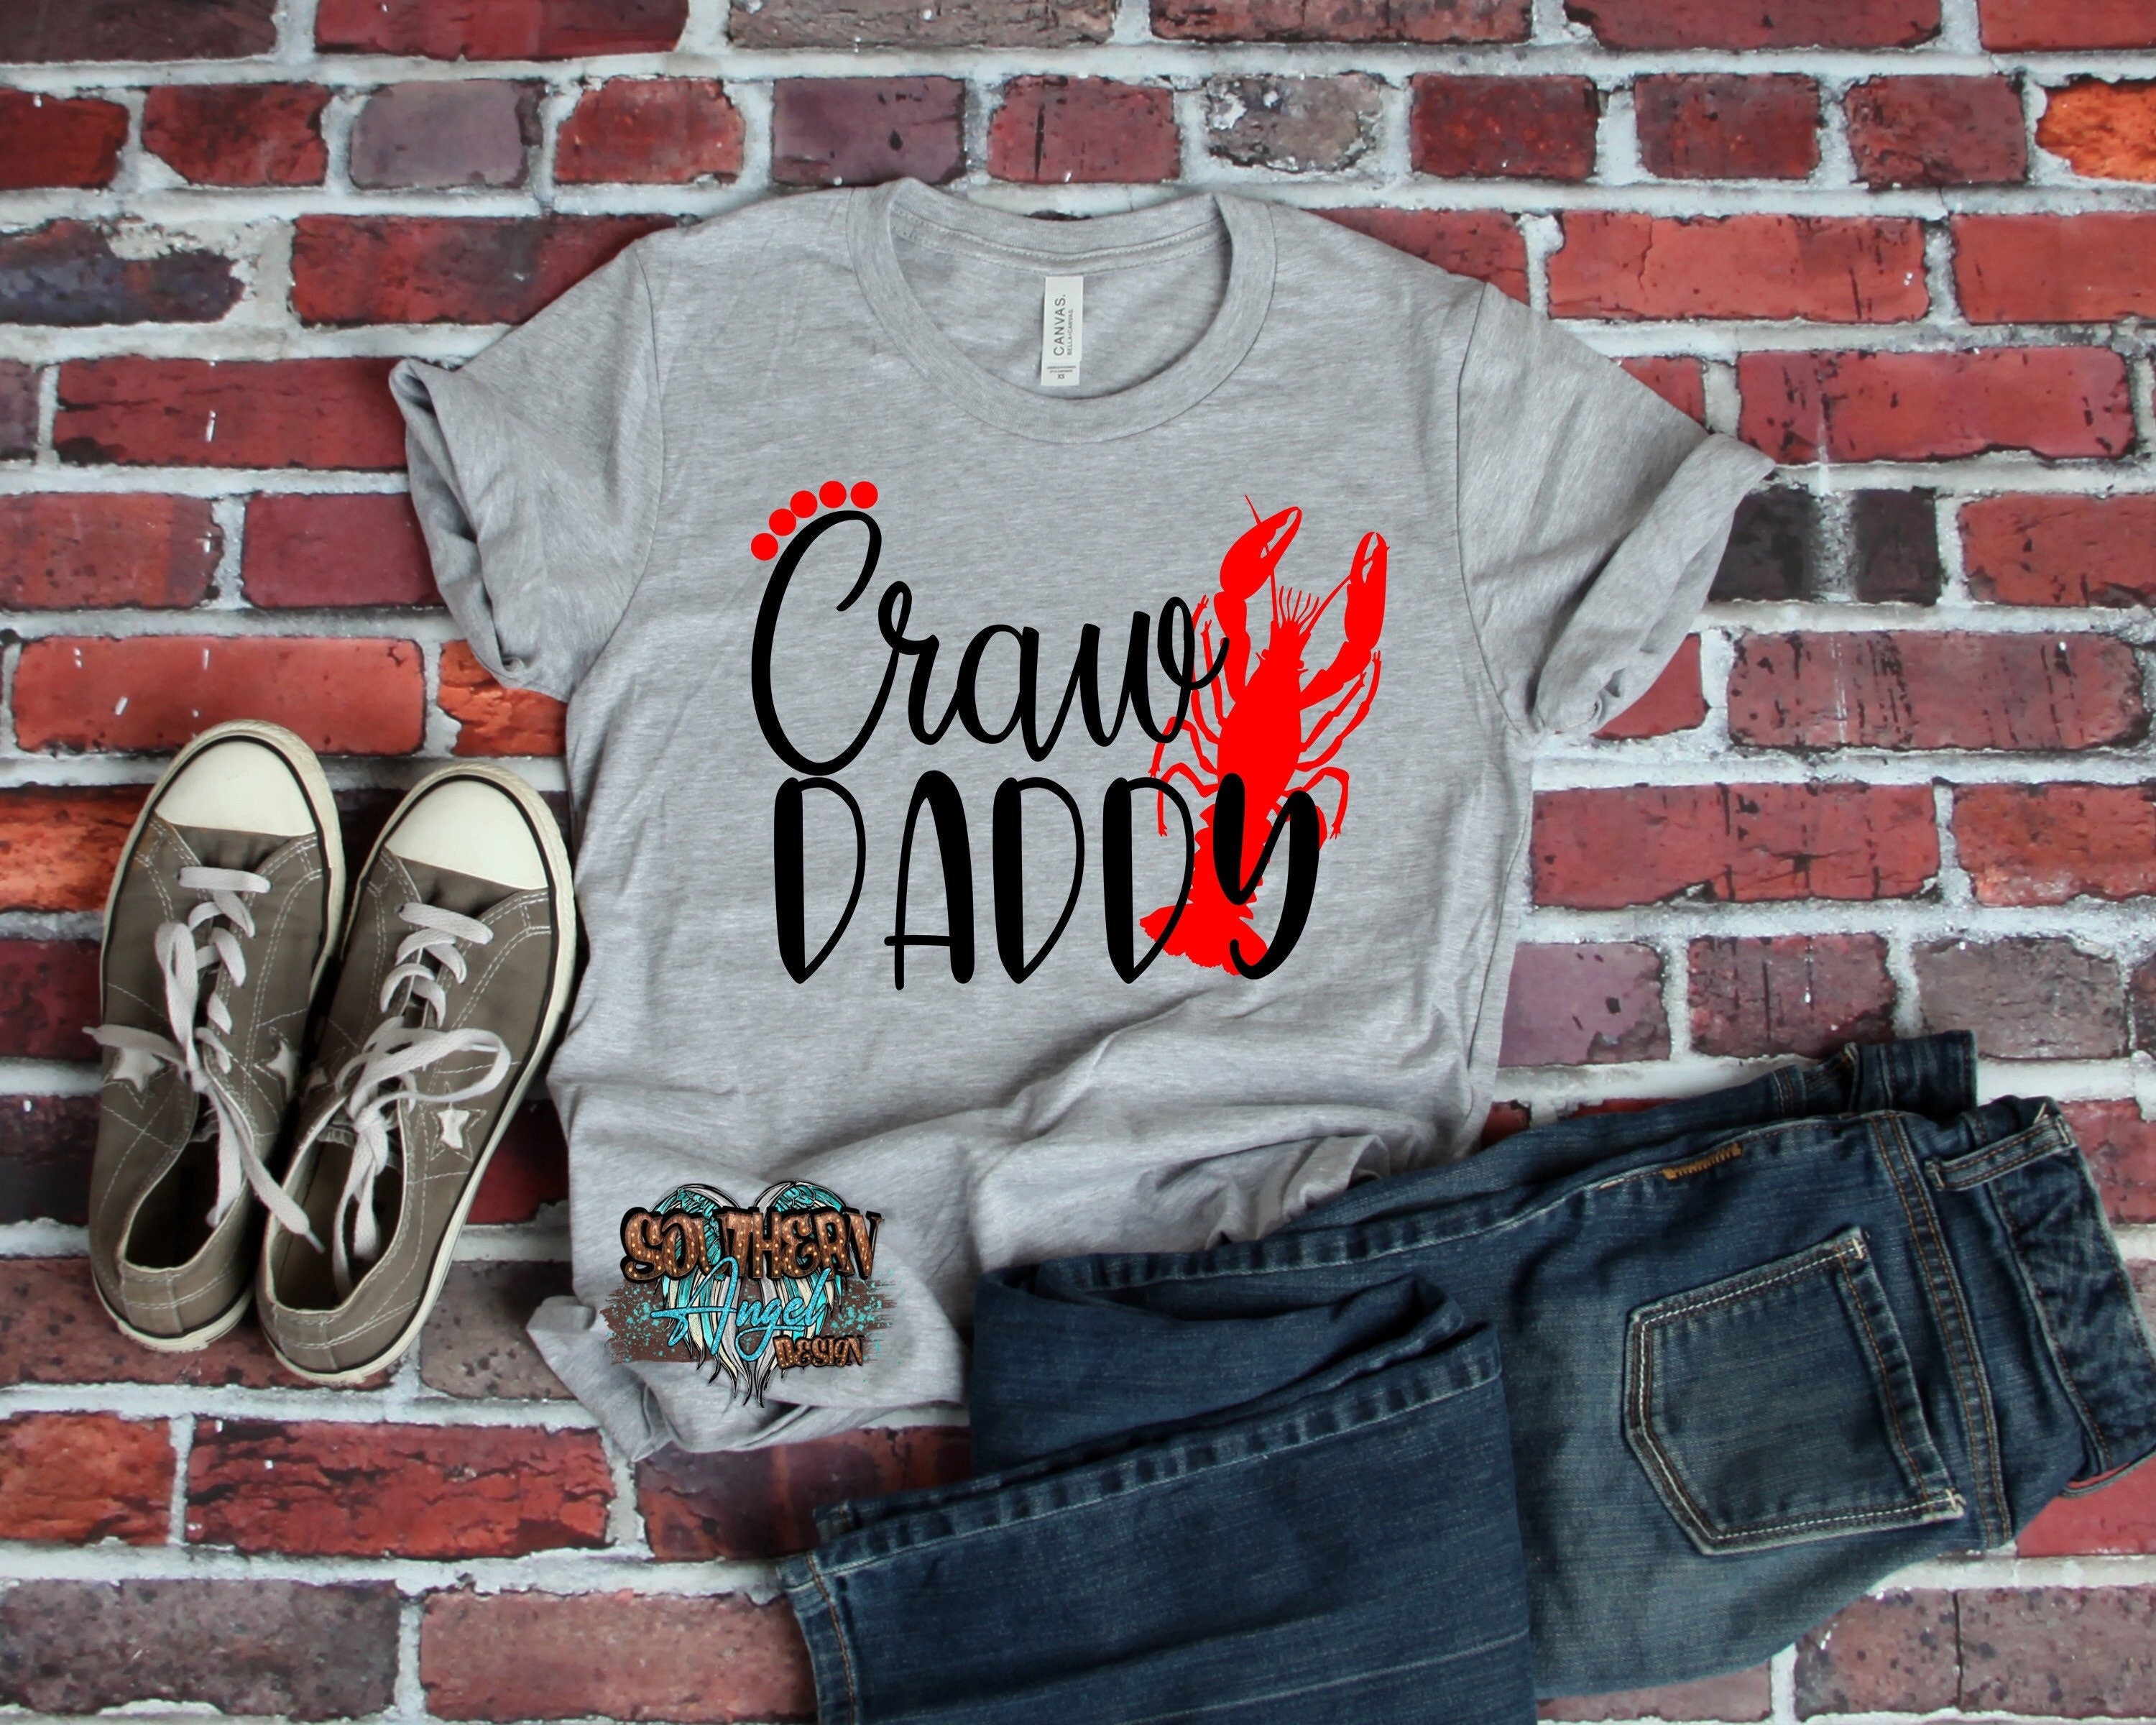 Crawdaddy t-shirt, Crawfish boil shirt, Men’s crawfish boil shirt, Shirt for dad’s, Who’s your daddy shirt, Craw mama shirt, Crawfish shirt